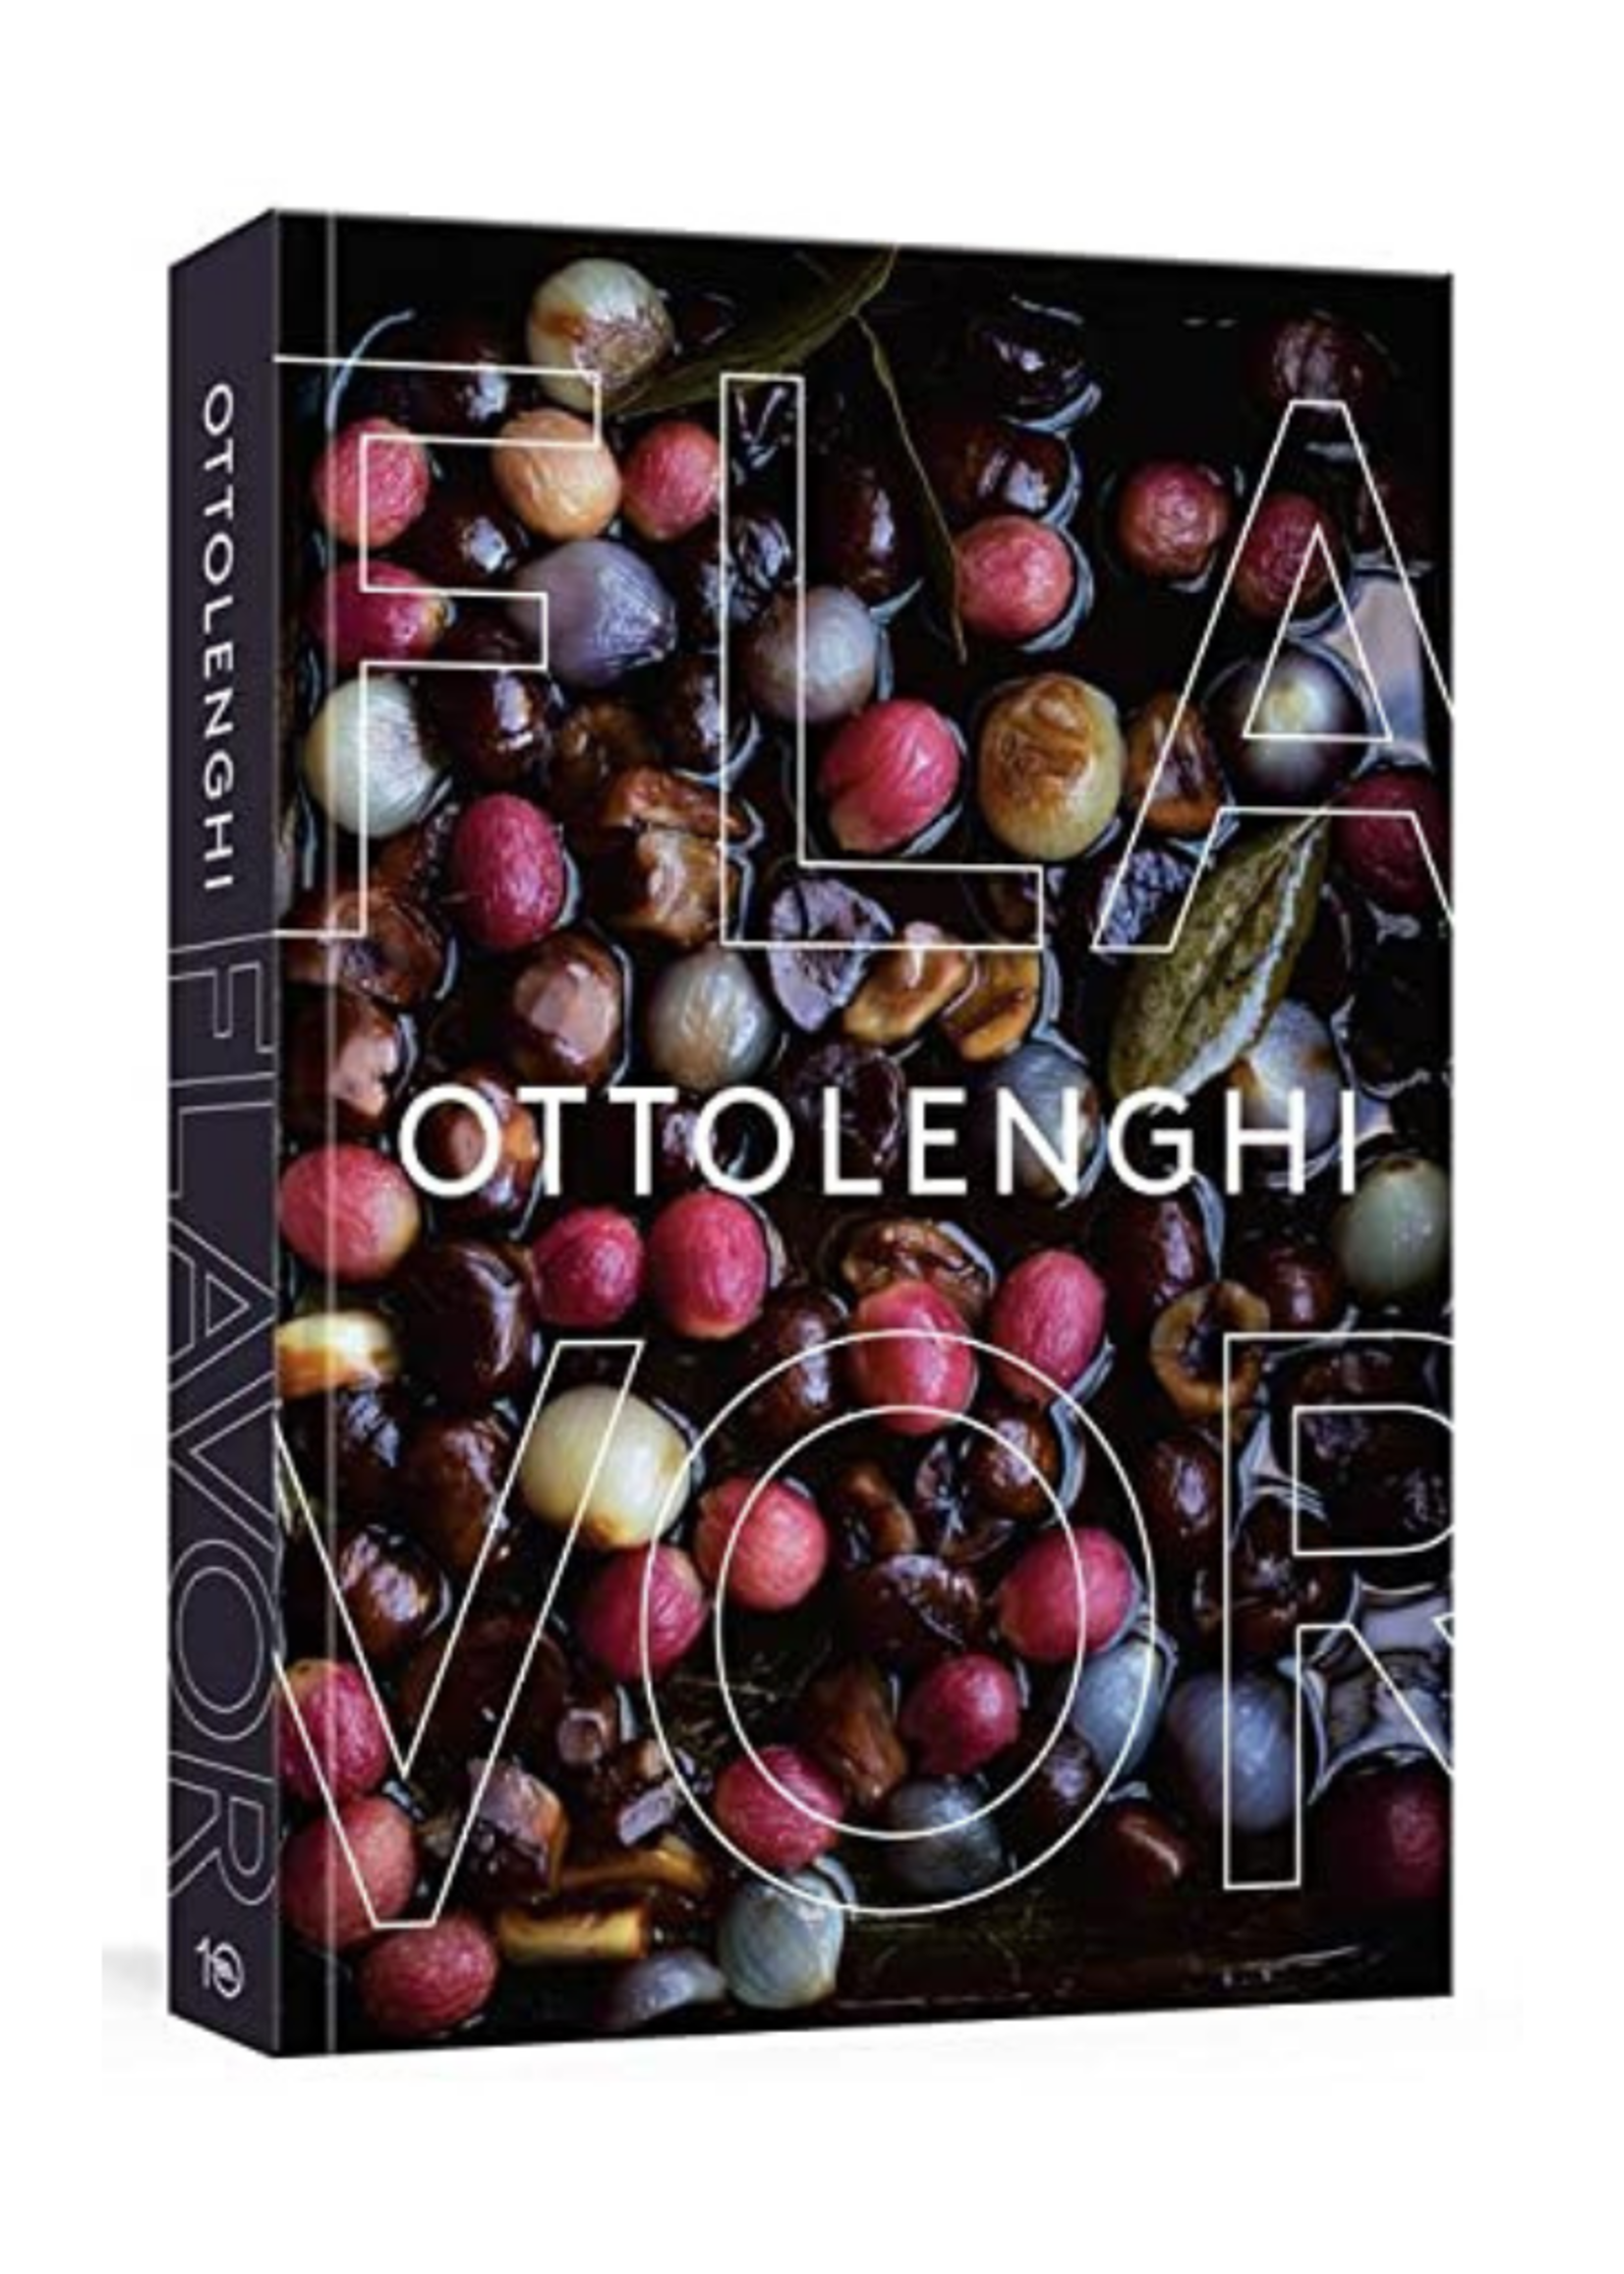 Random House Ottolenghi Flavor by Yotam Ottolenghi, Ixta Belfrage and Tara Wigley